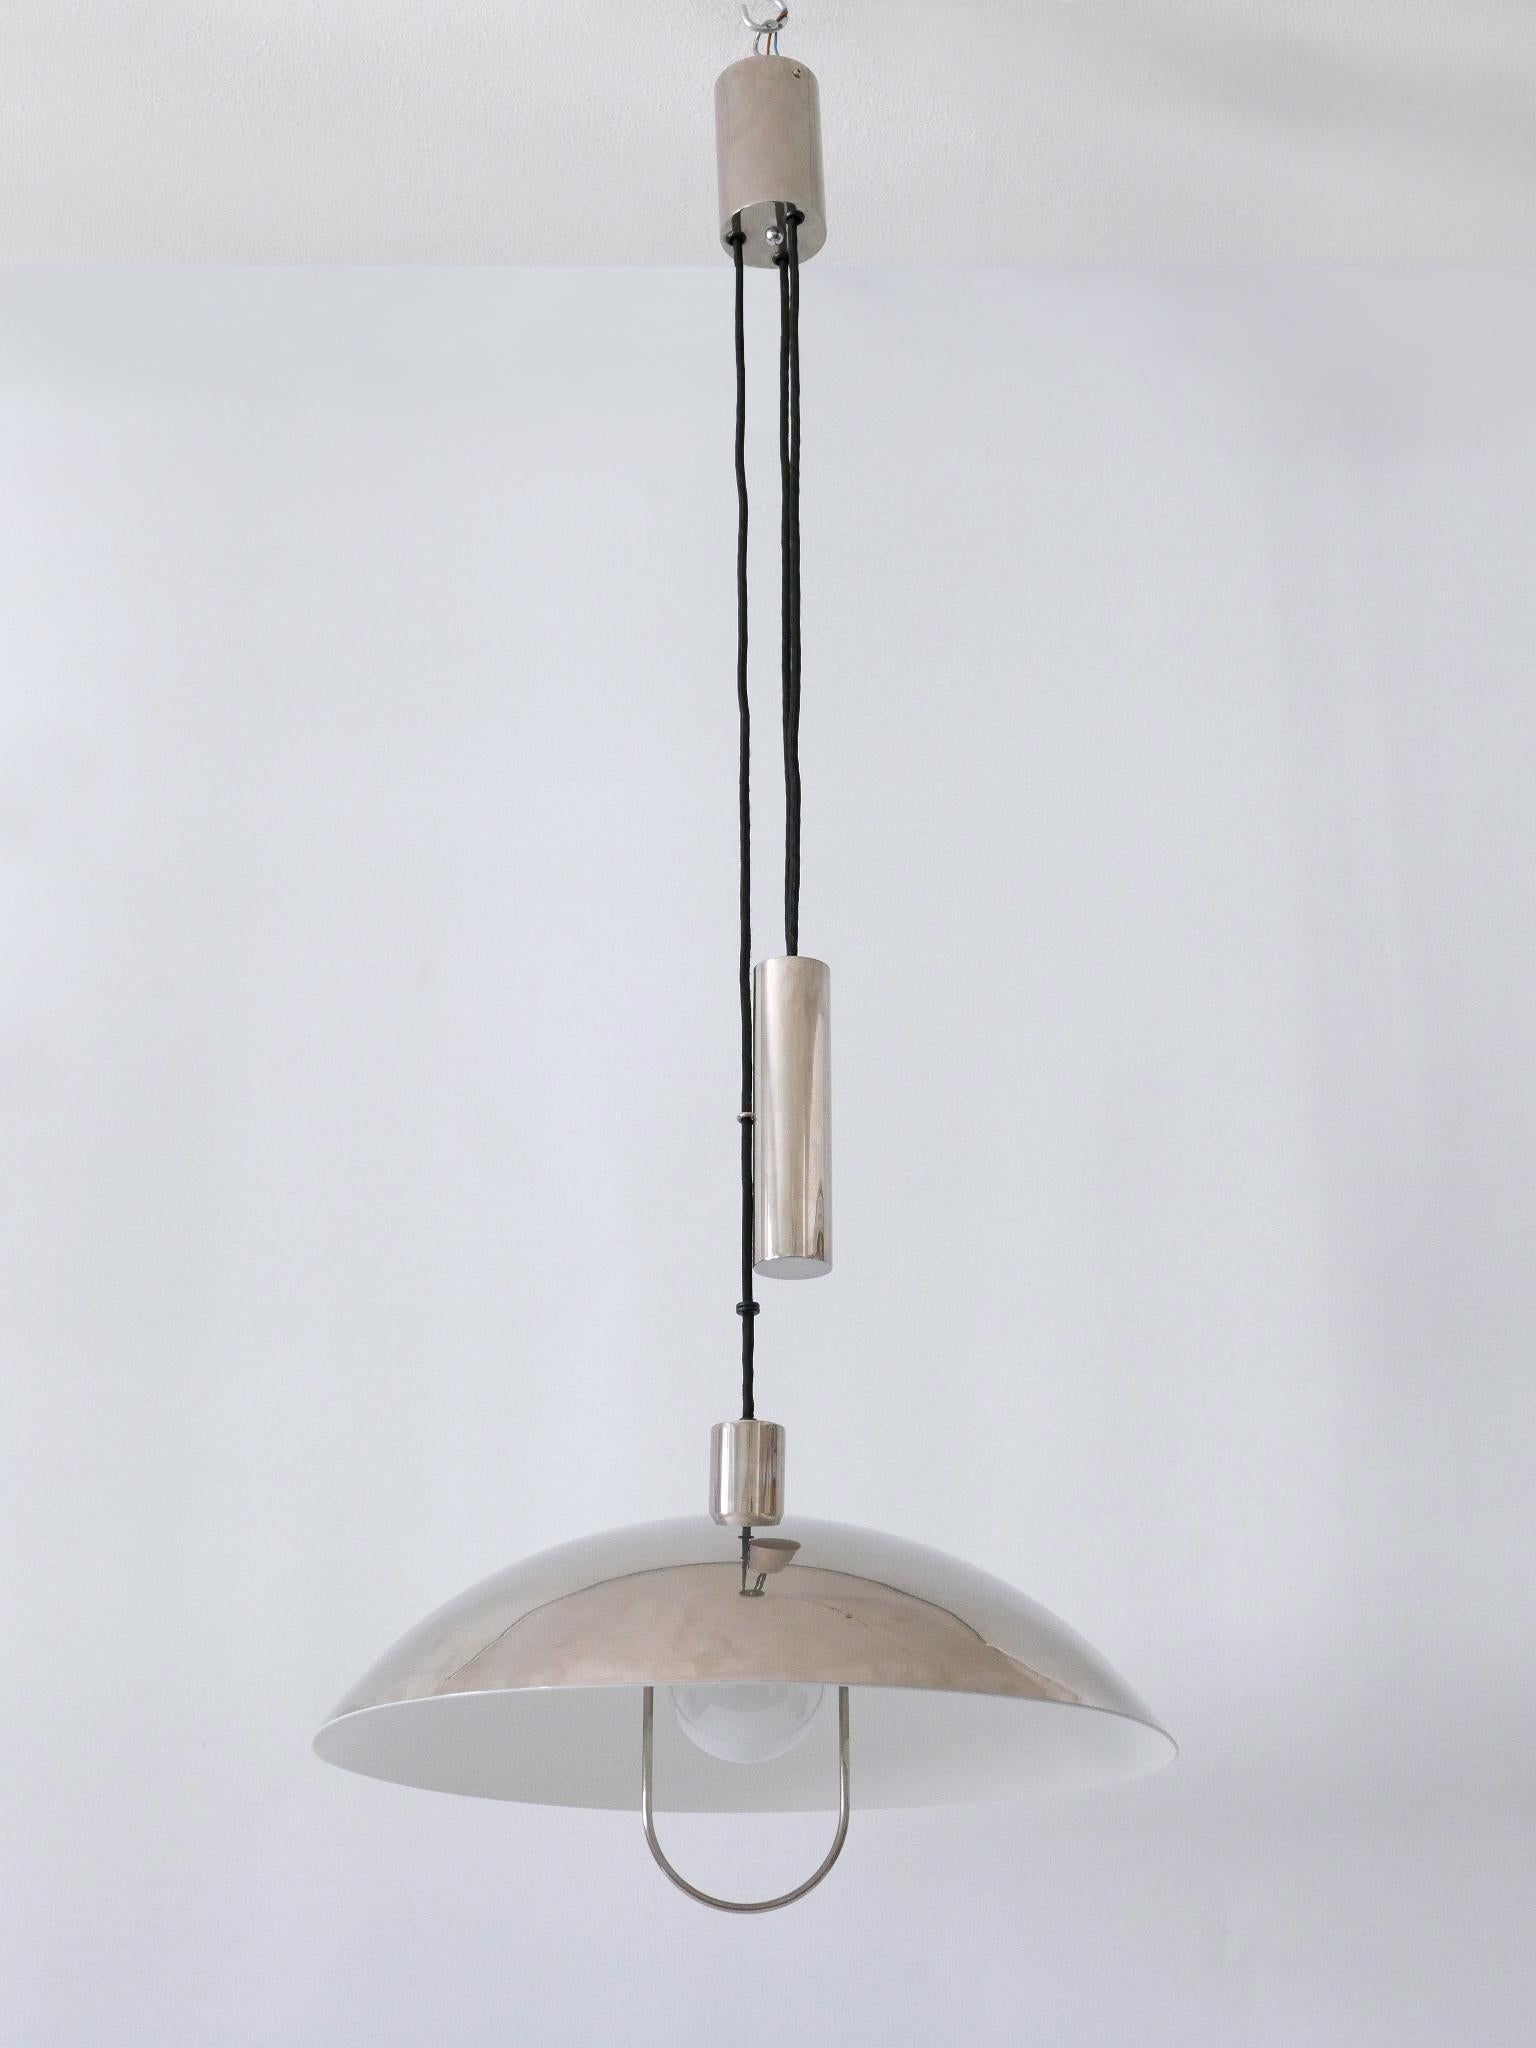 Early Tecnolumen Pendant Lamp 'Bauhaus HMB 25/500' by Marianne Brandt 1980s For Sale 3